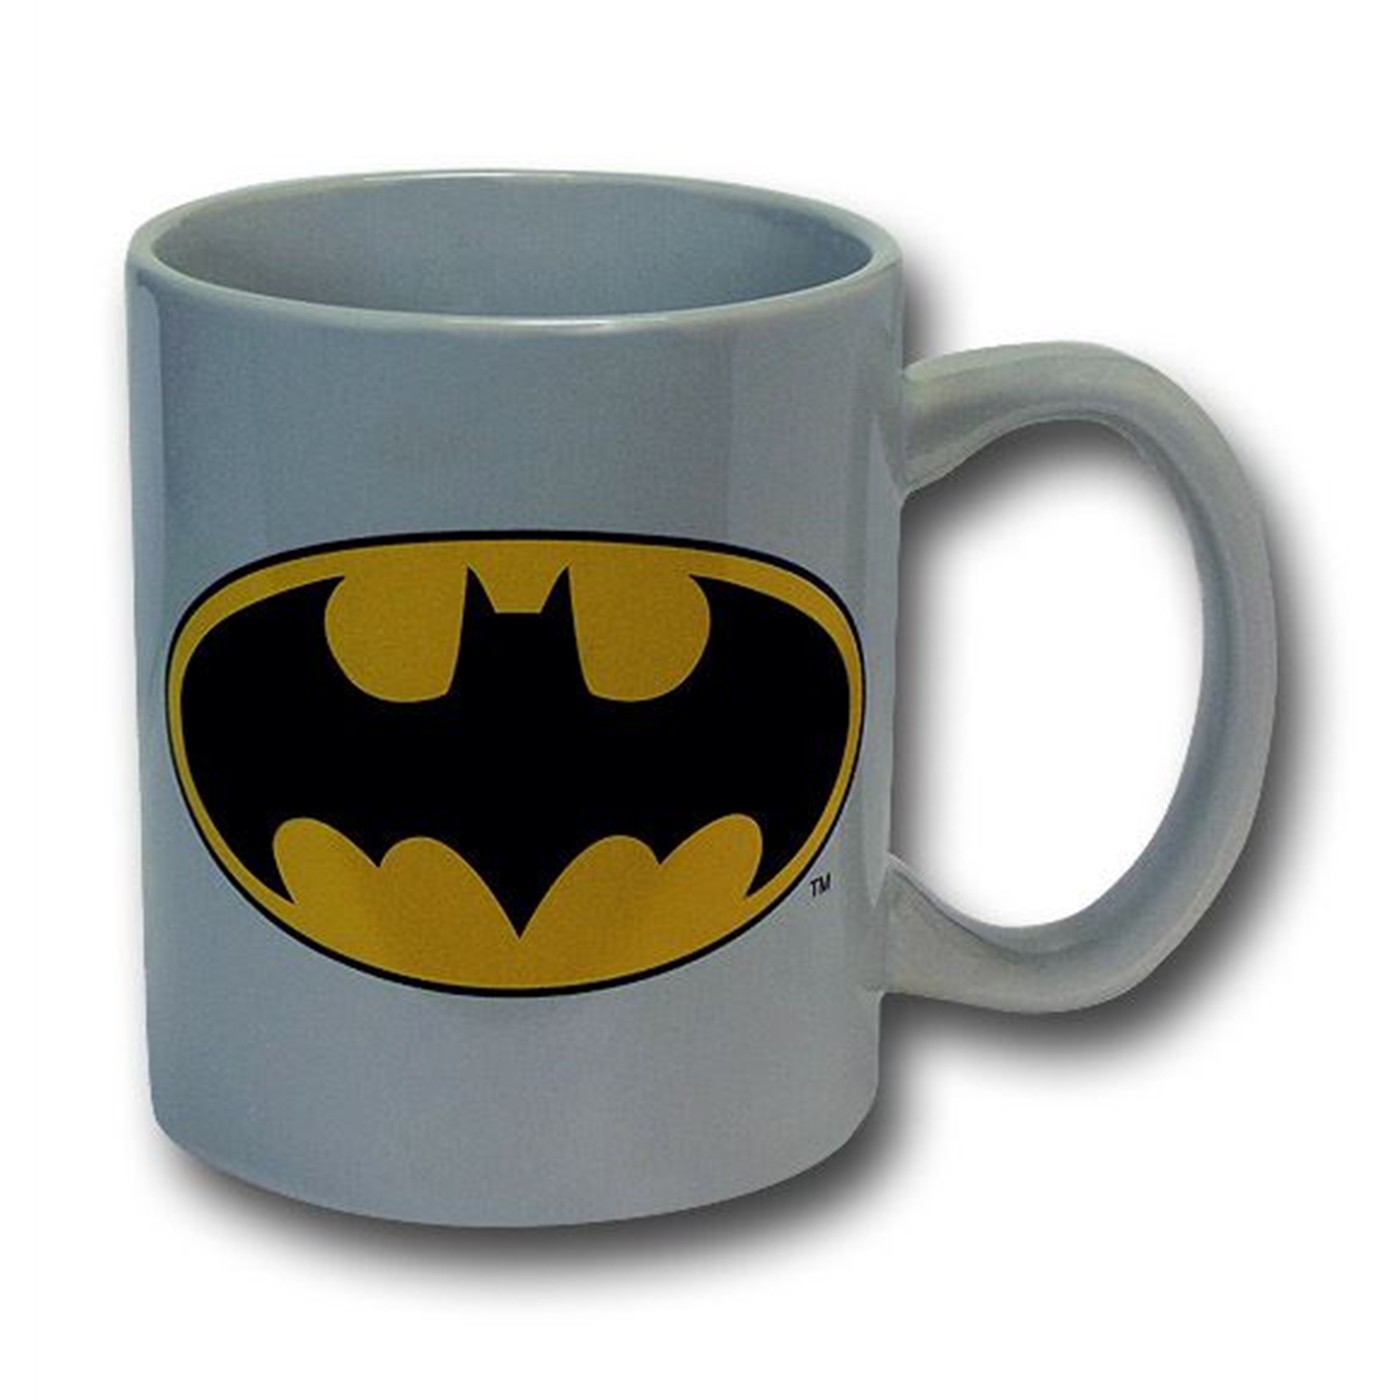 Batman Travel and Ceramic Mug 2-Pack